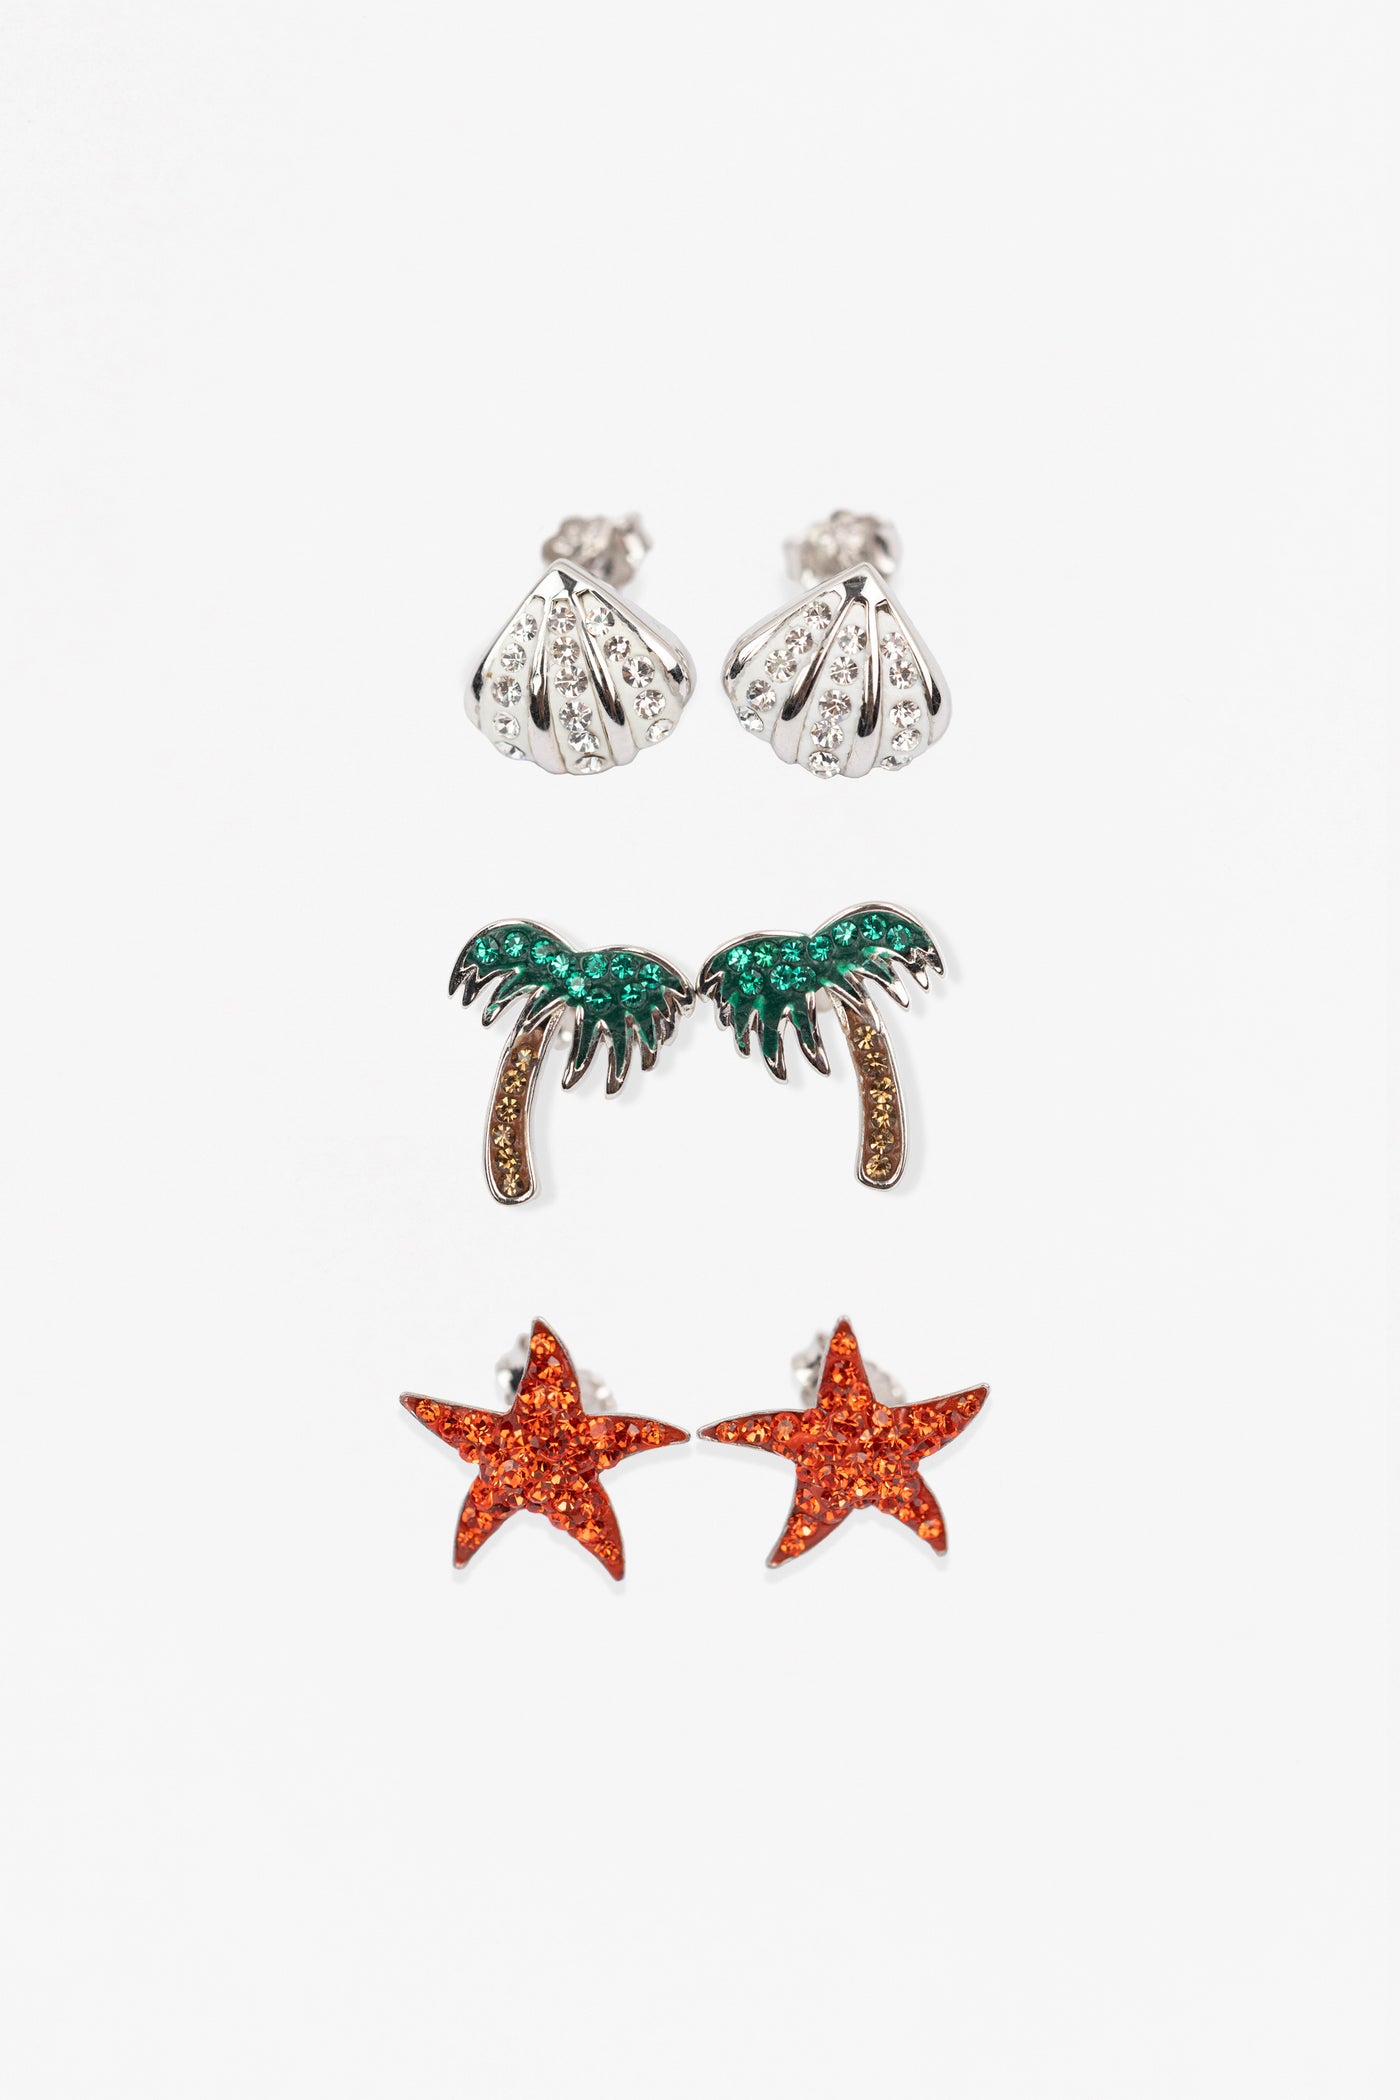 Clam Seashell Palm Tree Starfish Crystal Sterling Silver Three Pair Bundle Beach Earrings Set